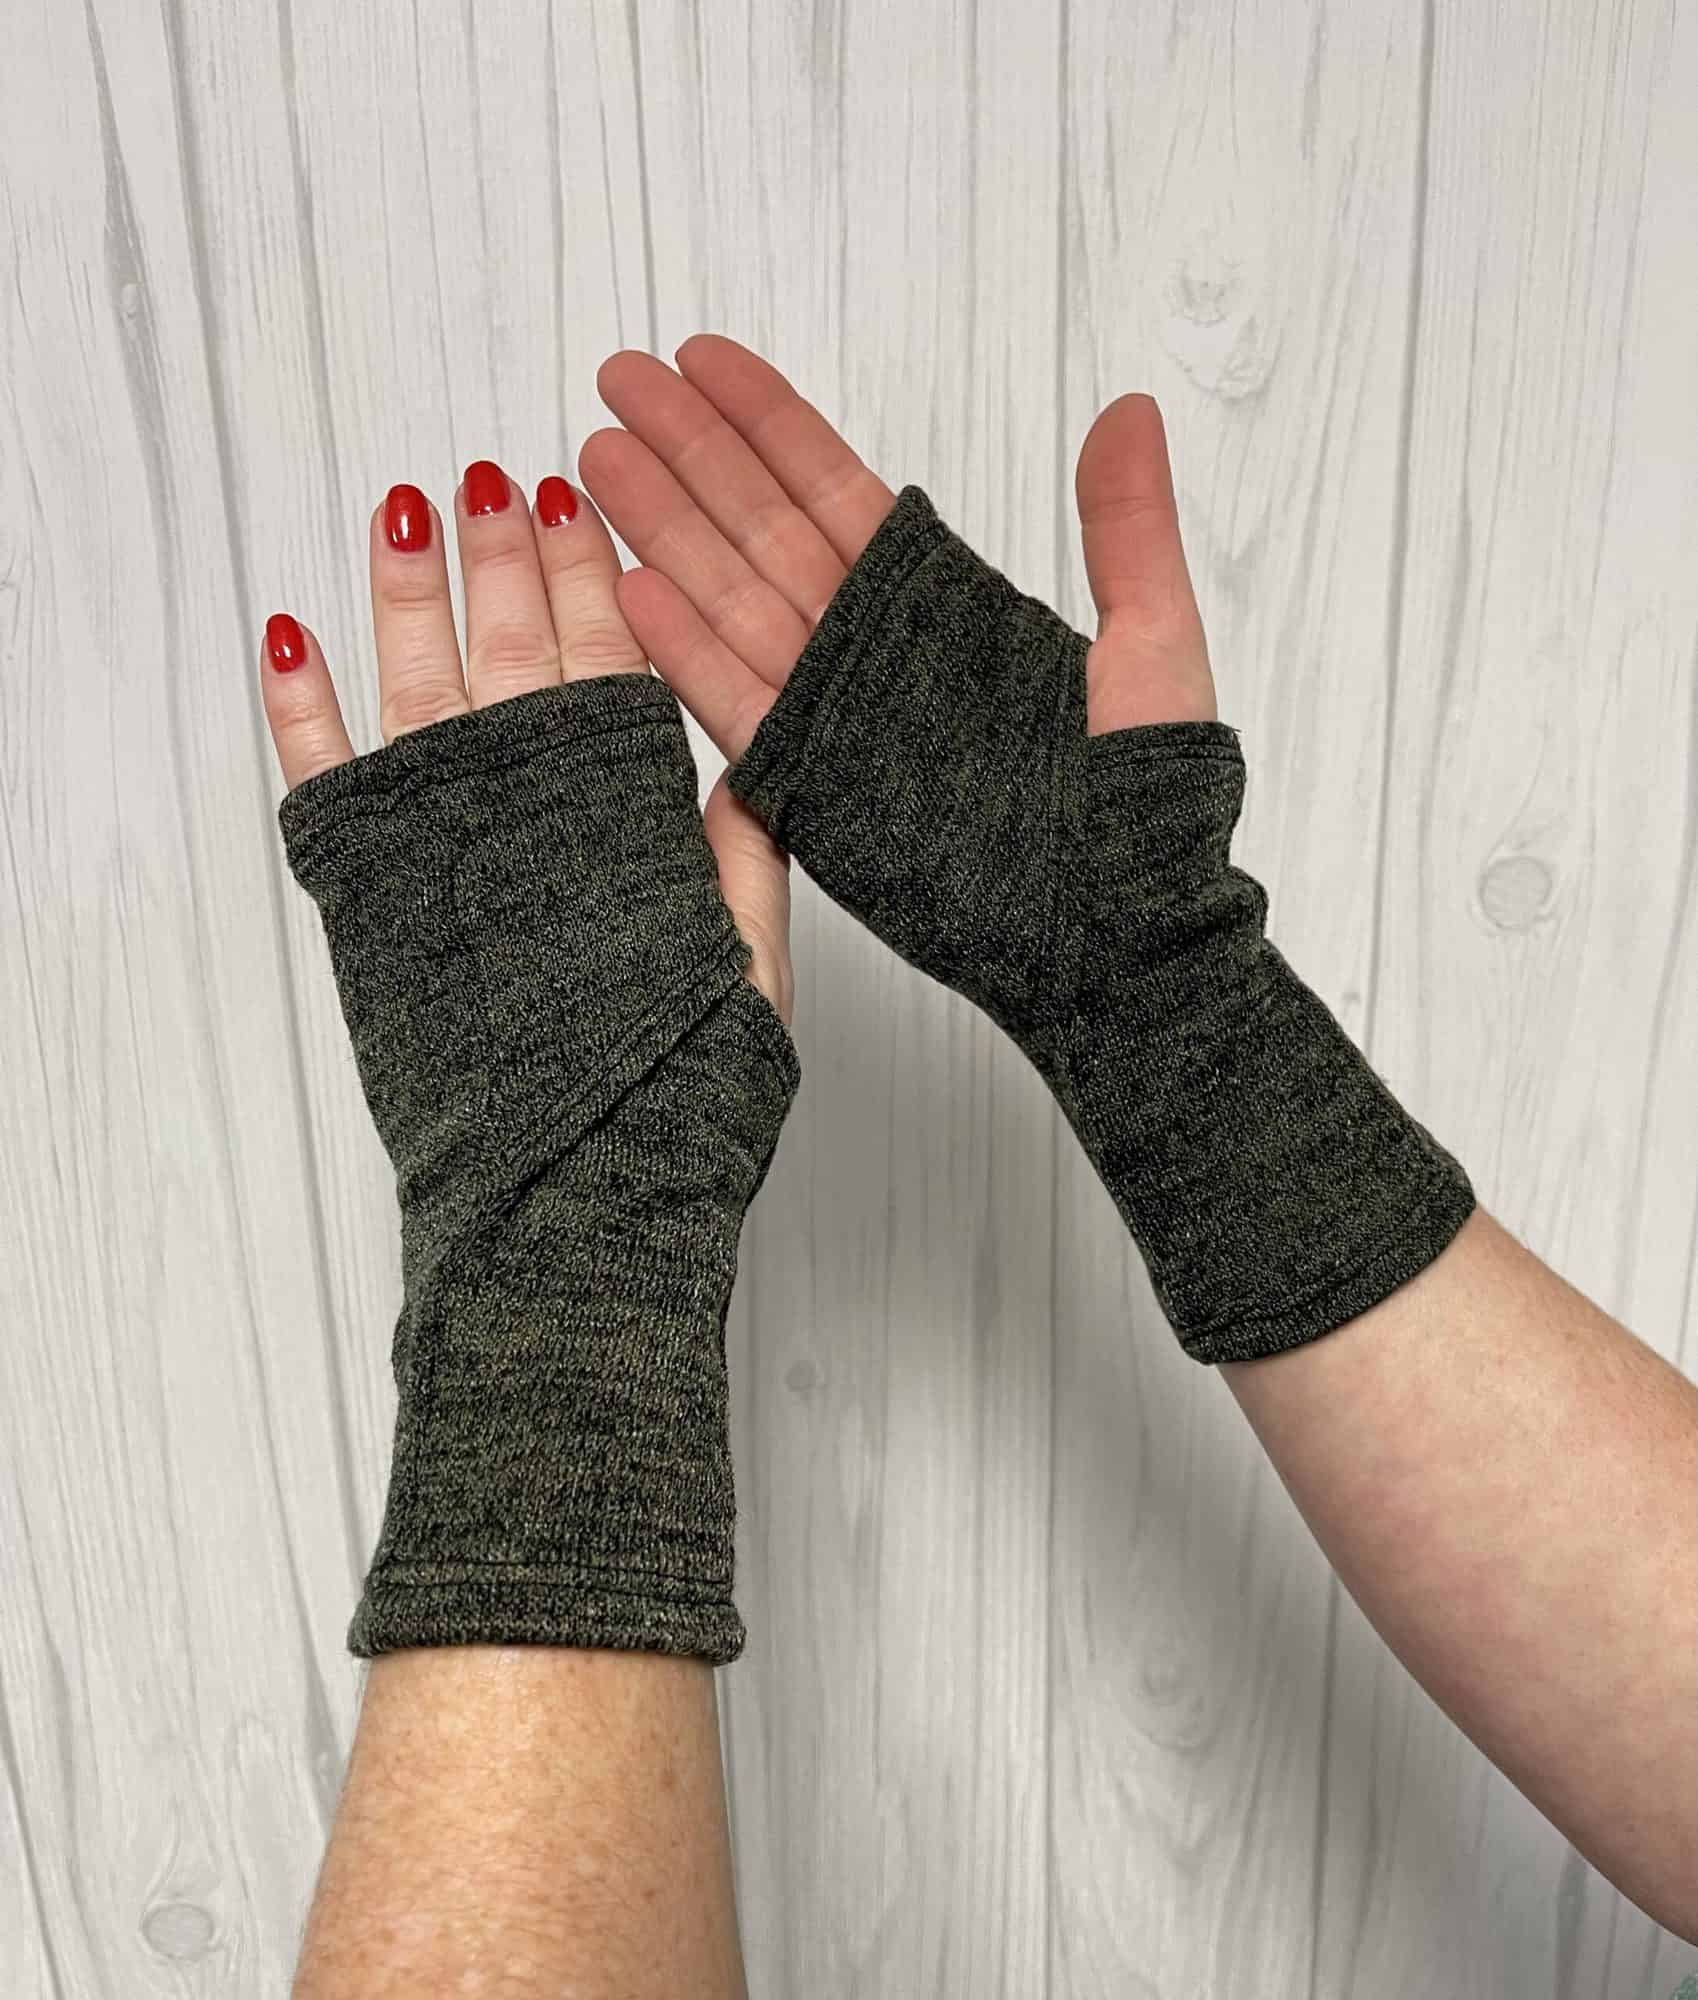 Free Fingerless Gloves - Patterns for Pirates